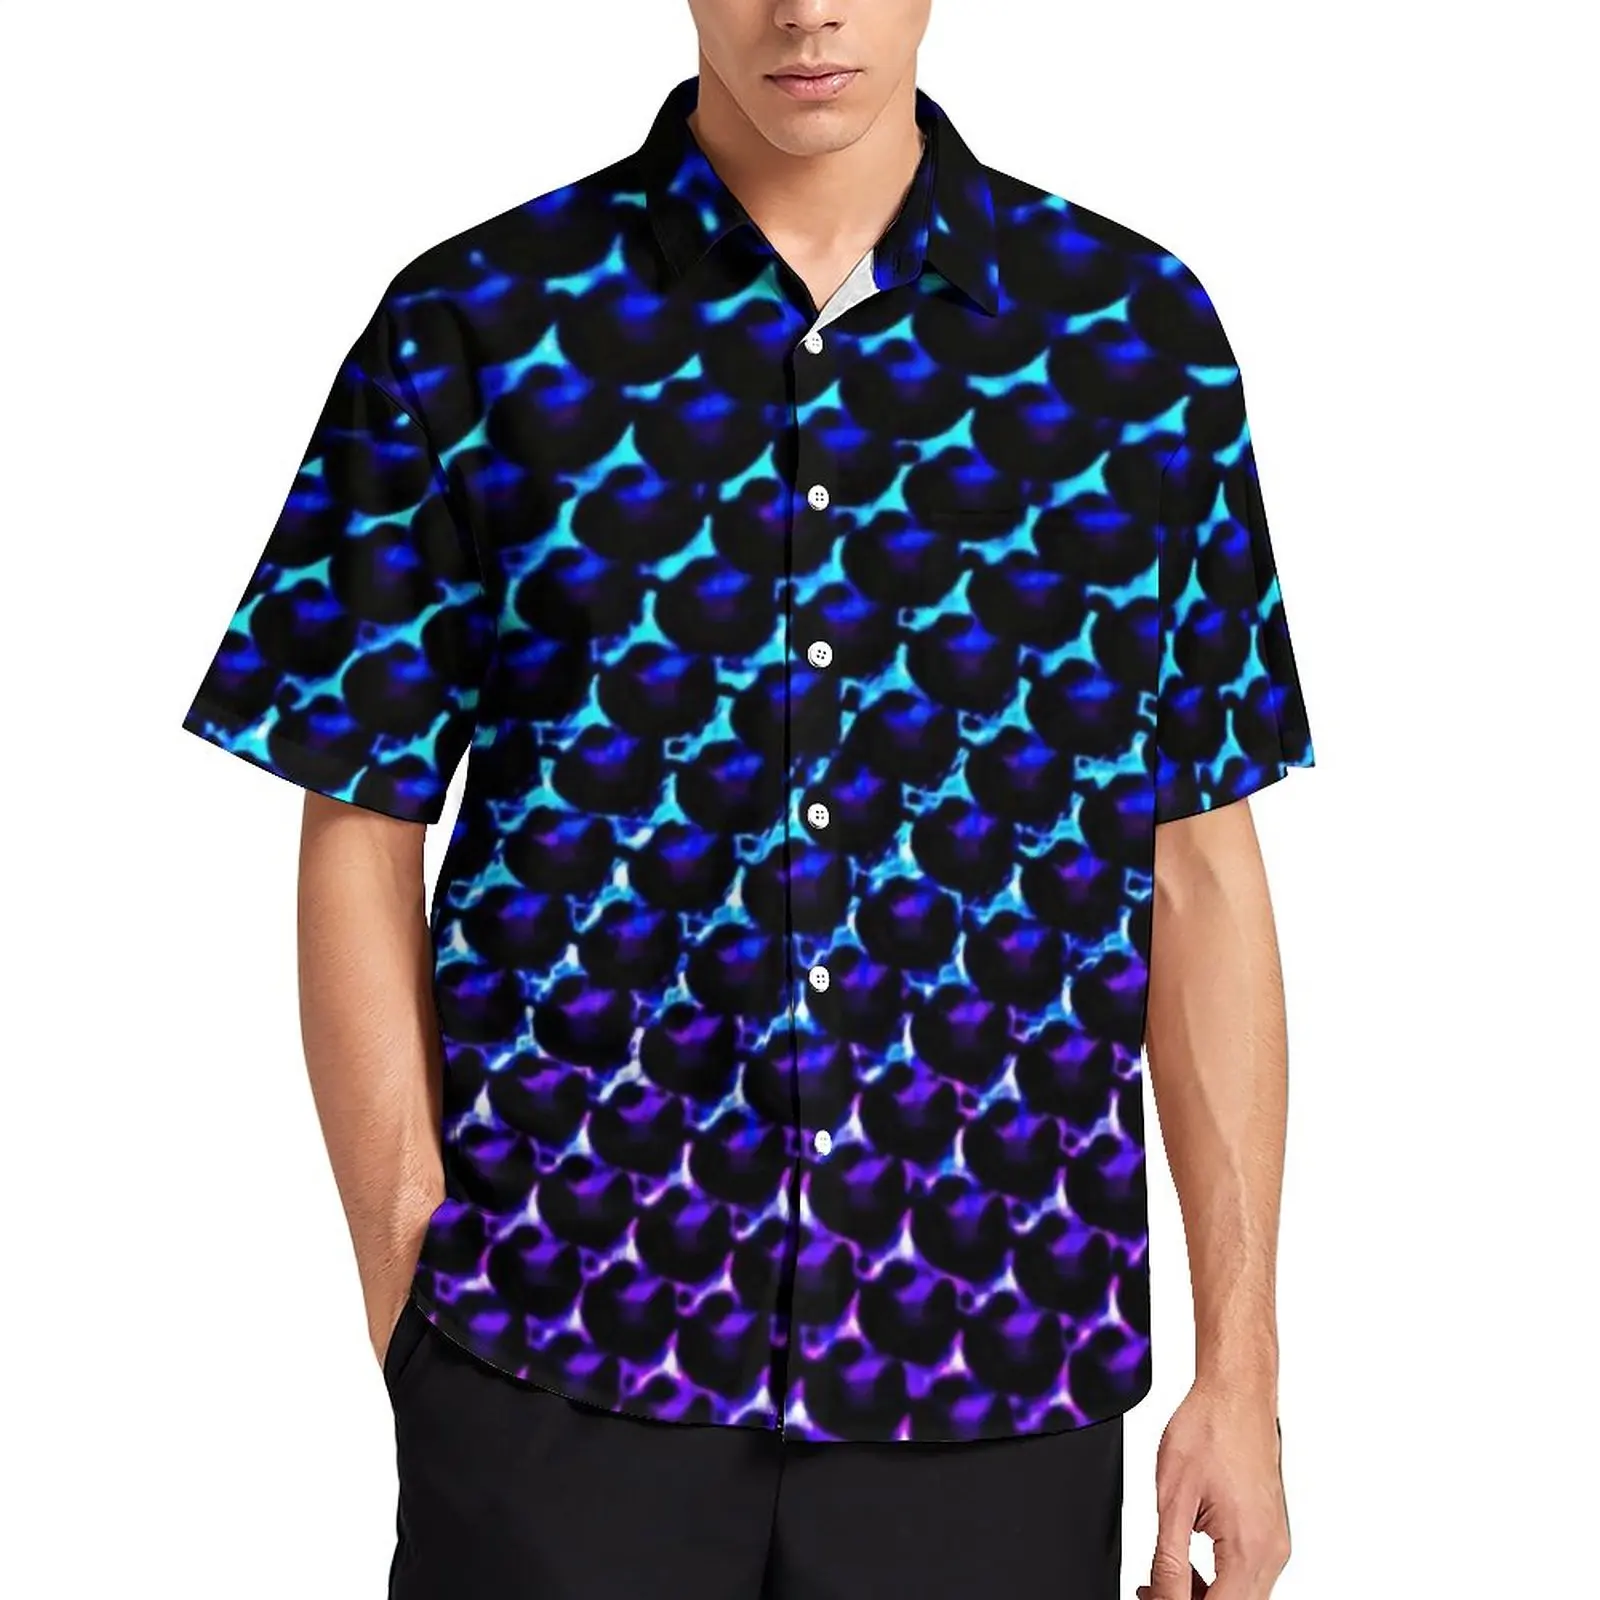 

Patterns Metallic Casual Shirts Colorful Sparkles Beach Shirt Hawaii Novelty Blouses Men Graphic Big Size 3XL 4XL